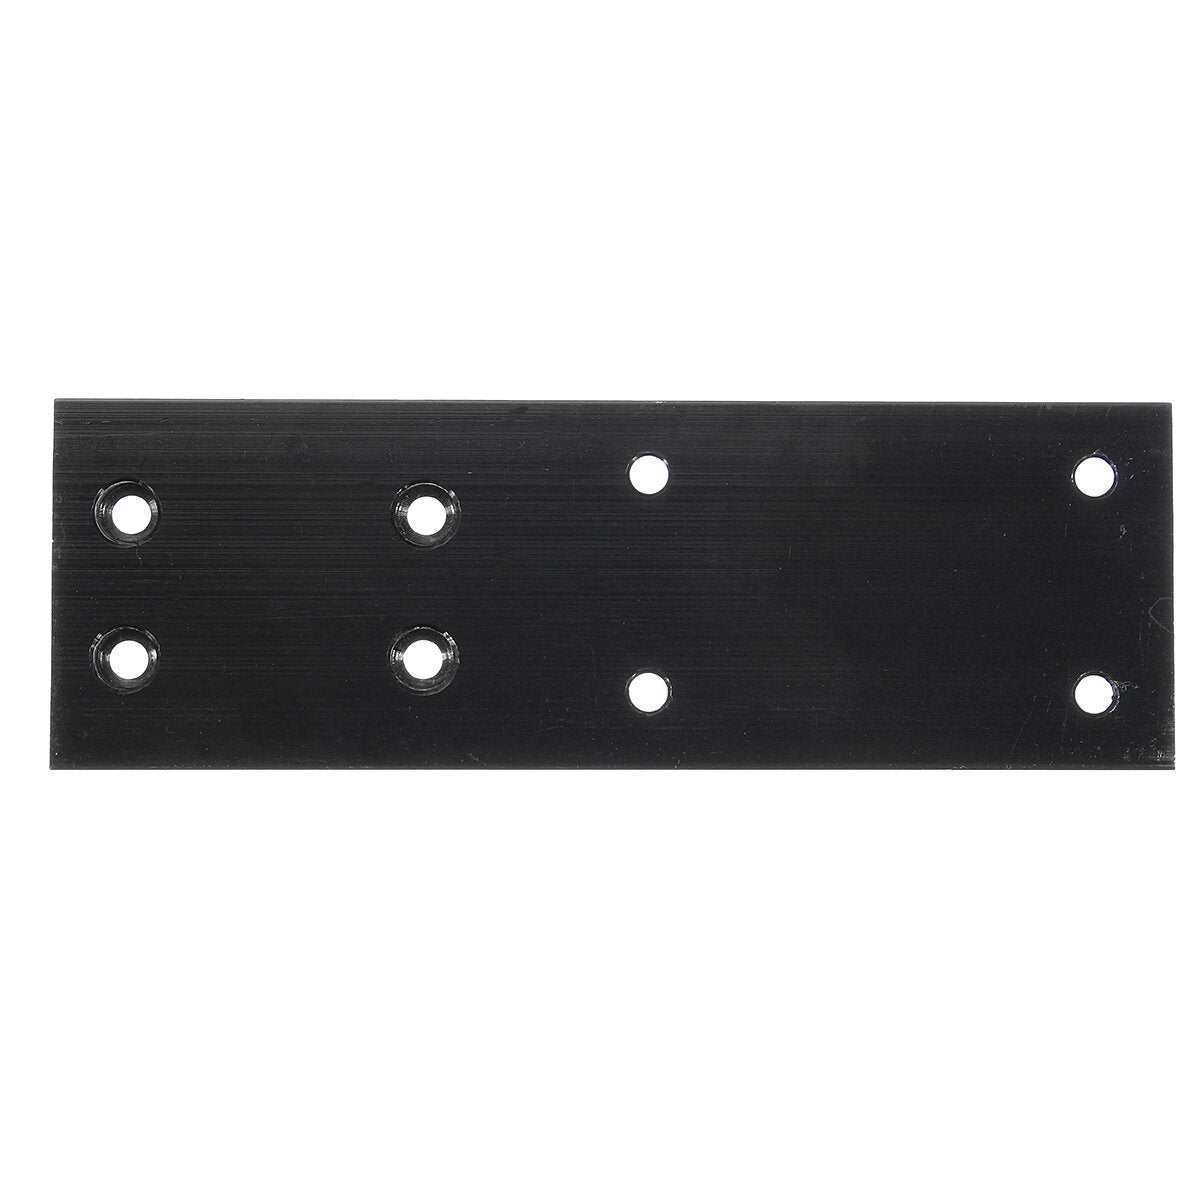 150 * 50 * 6mm motor slide connection plate elektrische lineaire schuiftafel xy axis pinboard board